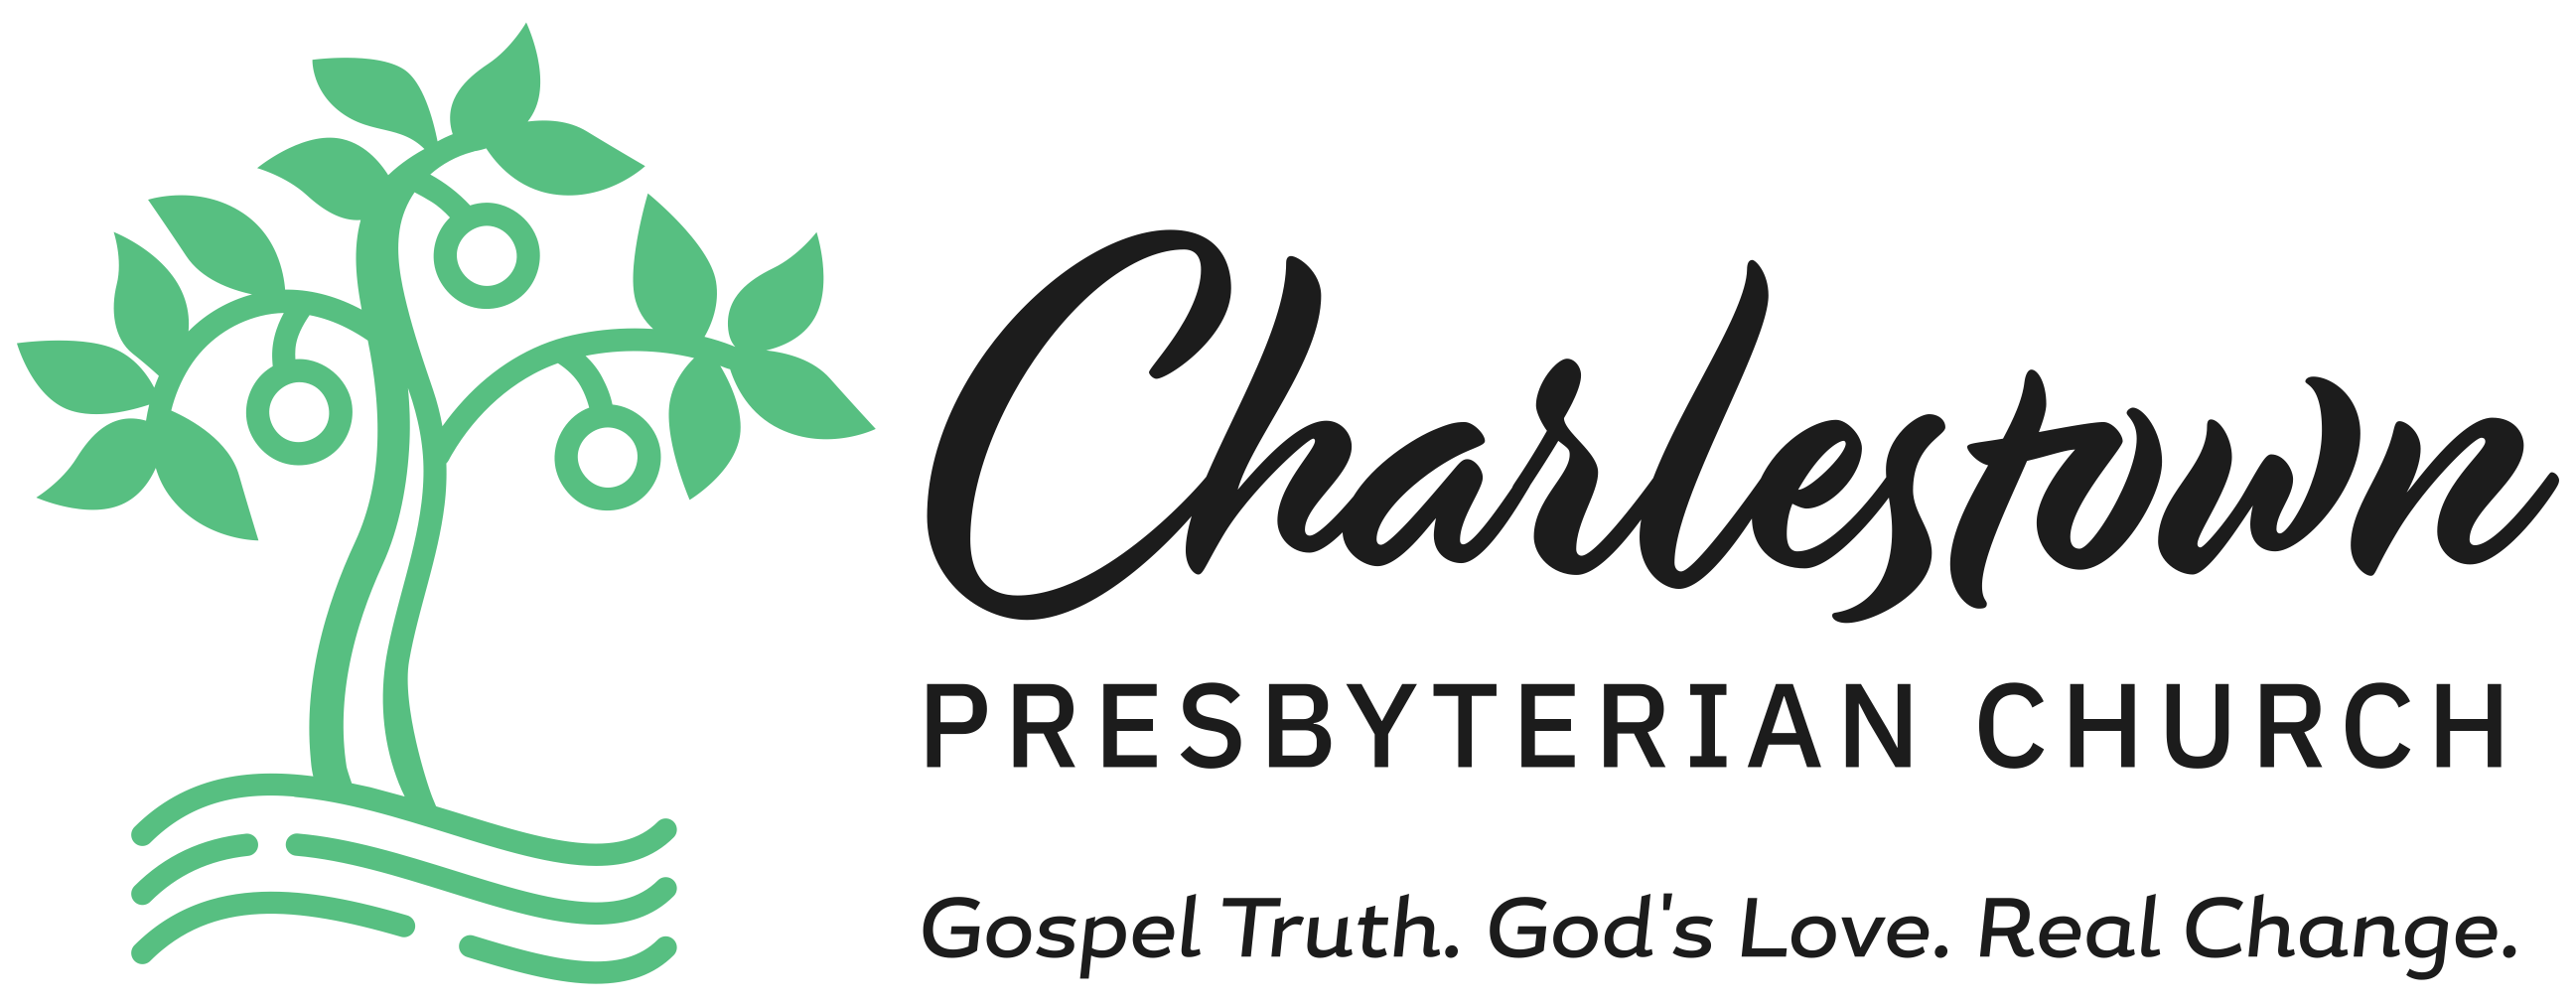 Charlestown Presbyterian Church